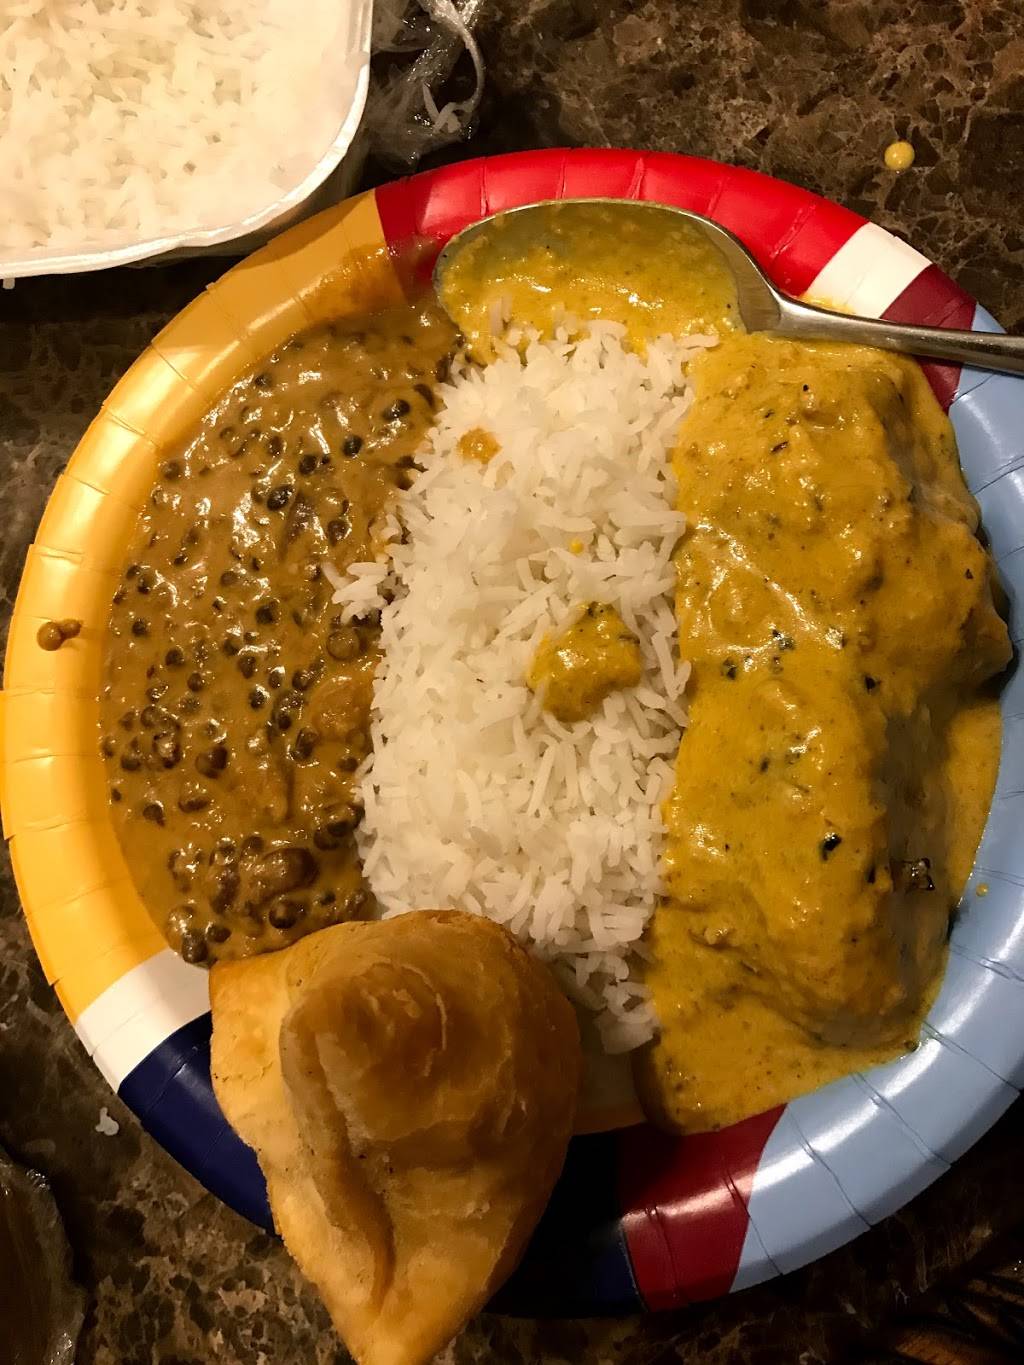 Spice Indian Veg Cuisine Food Truck | 14702 FM 529 road, Houston, TX 77095, USA | Phone: (281) 961-5251